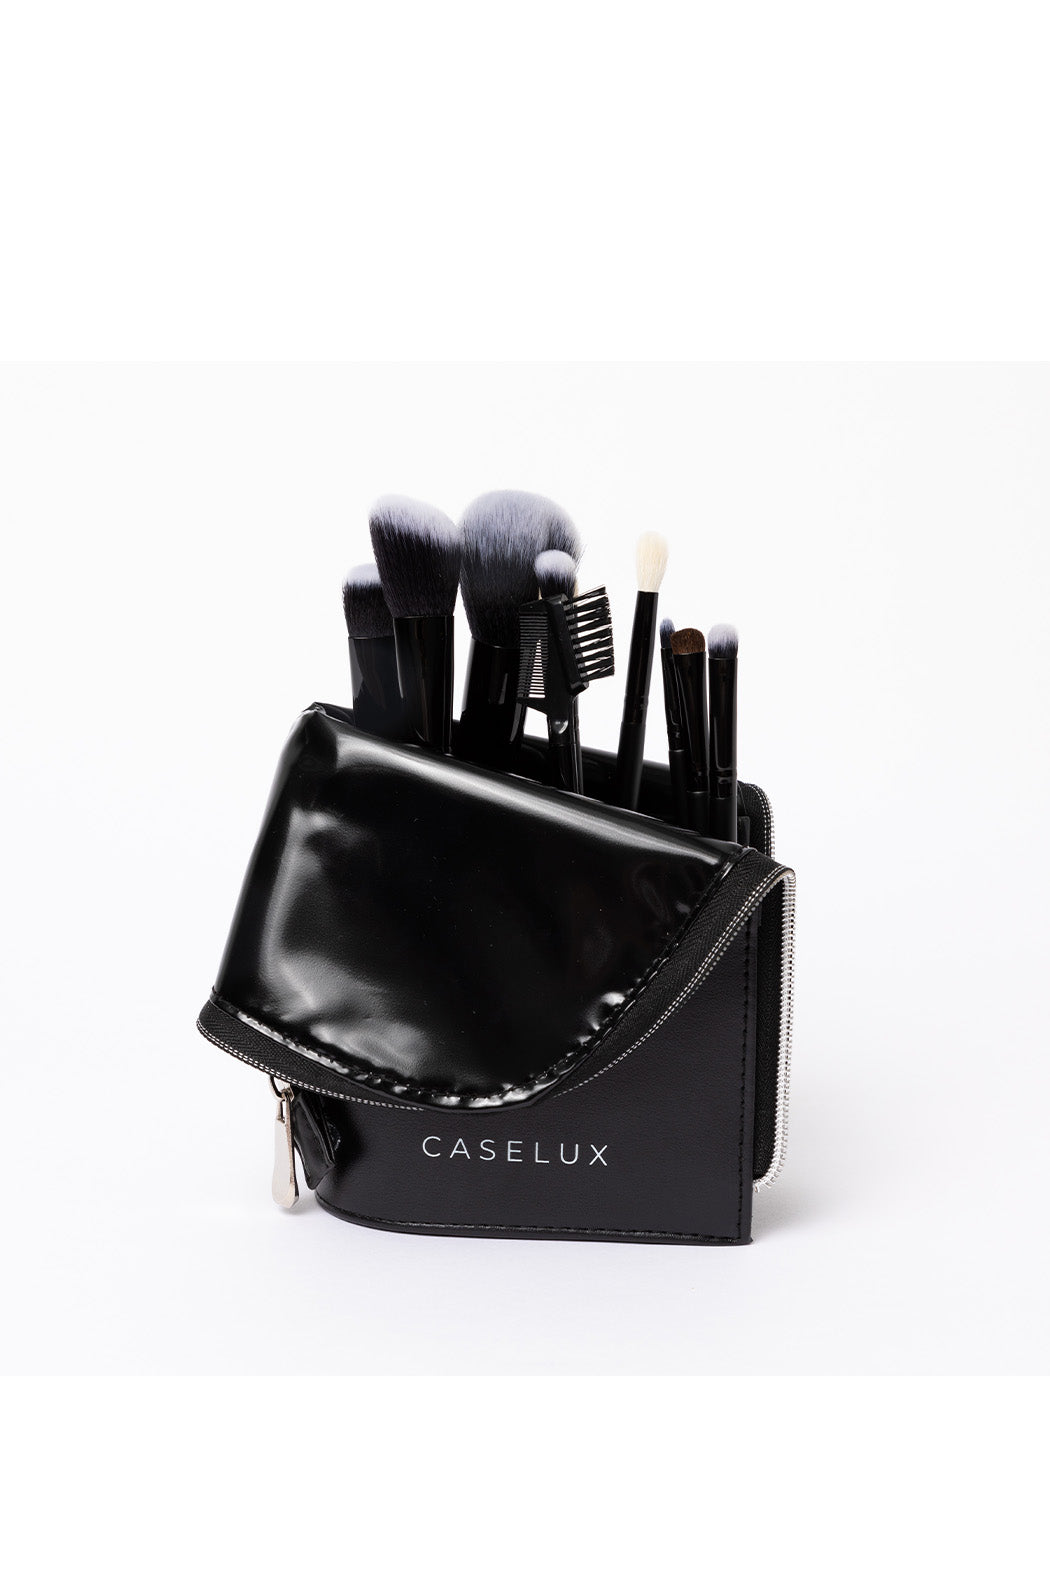 Faruxue Portable Makeup Brush Rolling Case - Professional Makeup Brushes  Organizer Bag Makeup Artist Cosmetic Case Travel Brush Holder Rollable Case  